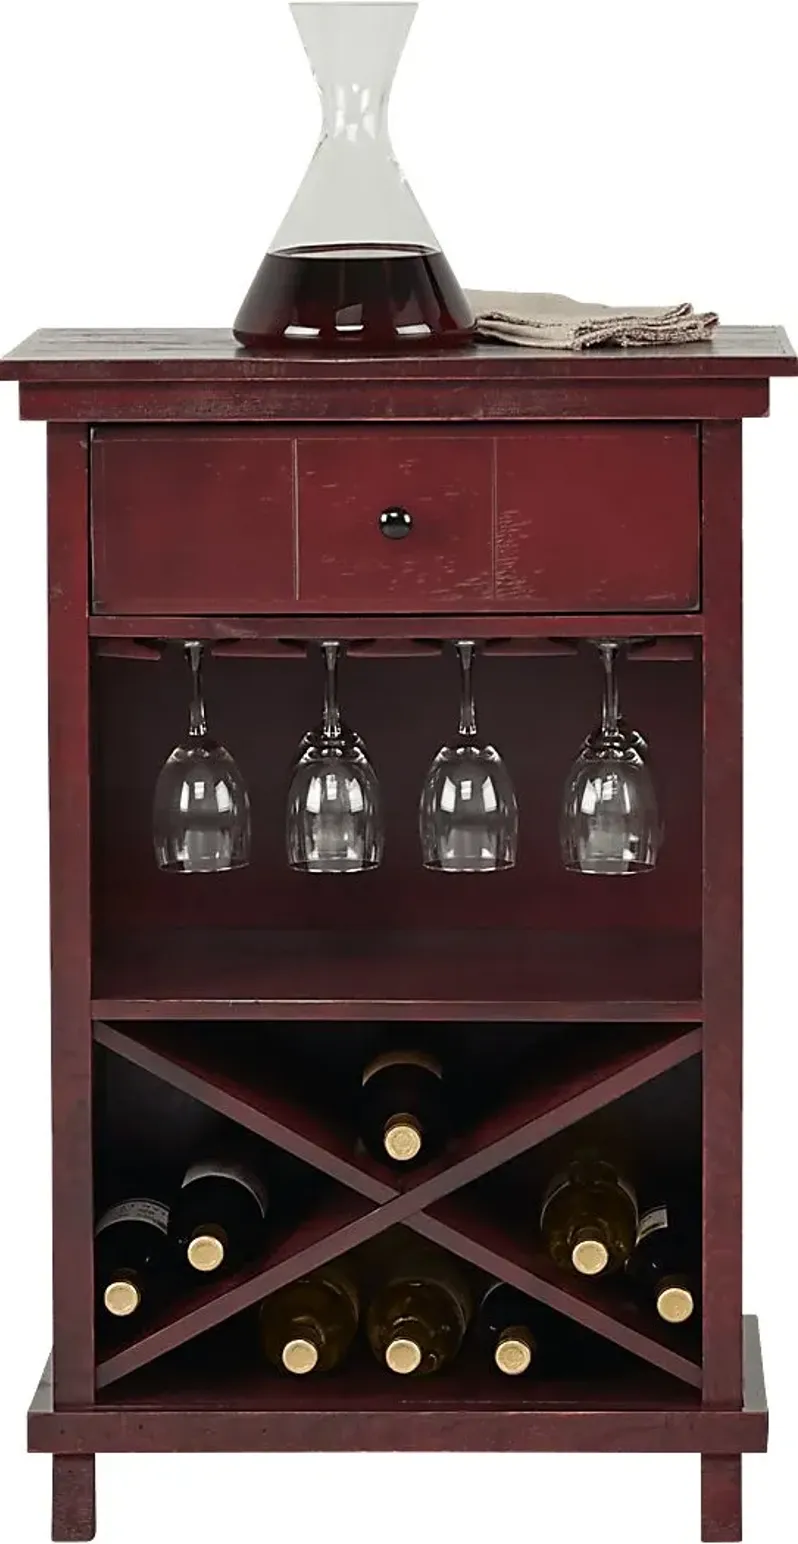 Havenwood Red Wine Cabinet